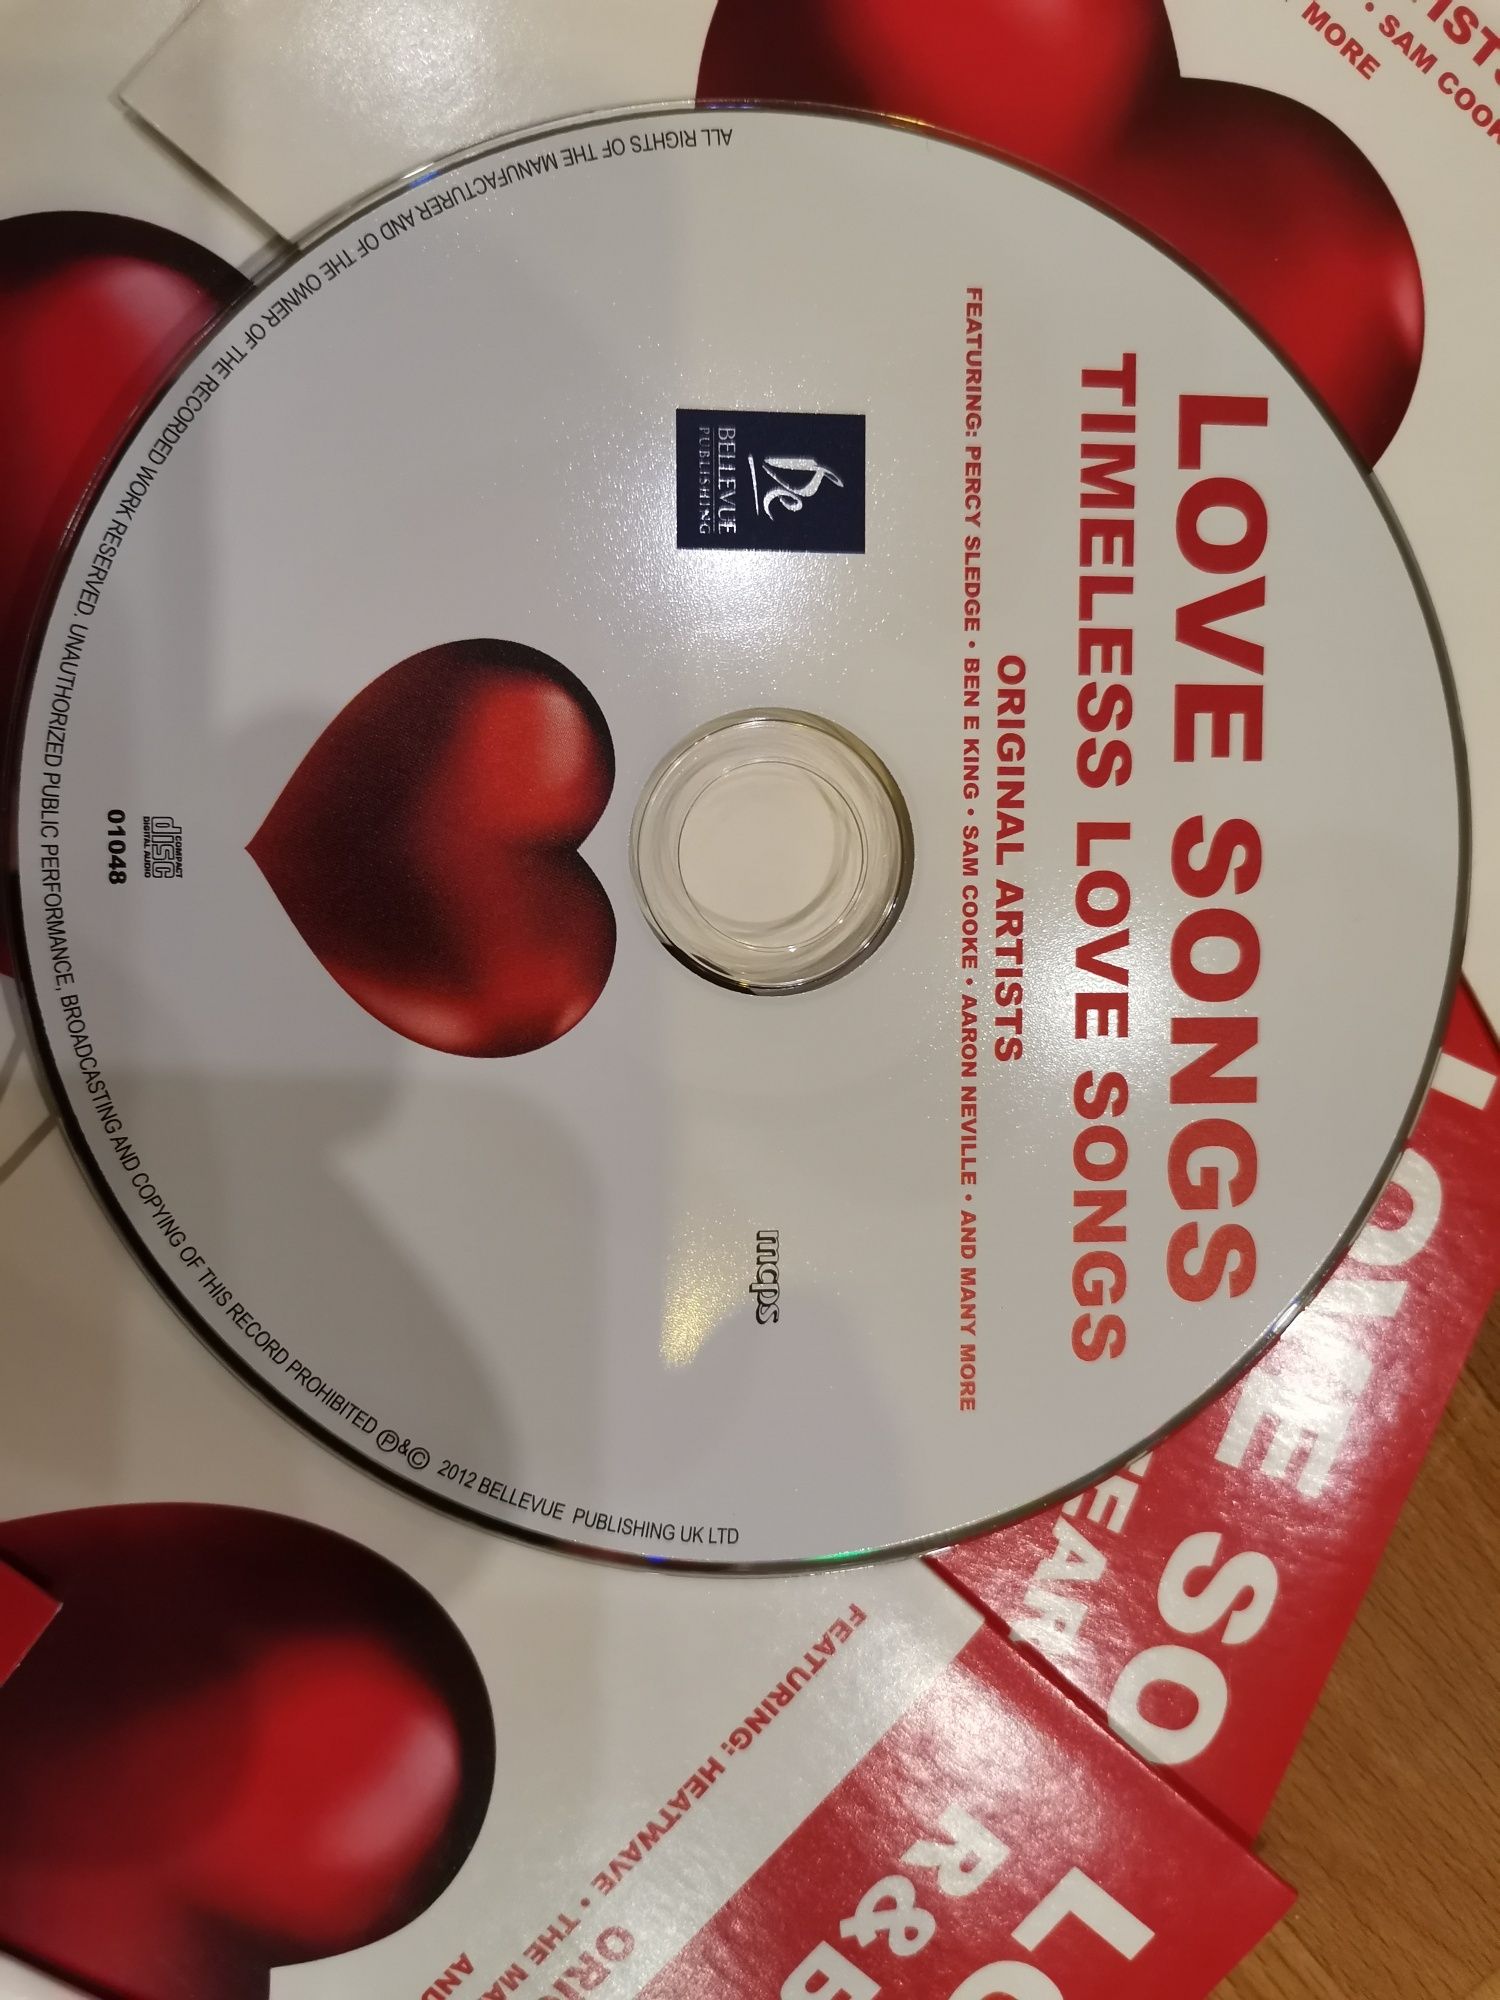 Vând colecție cd uri Love Songs